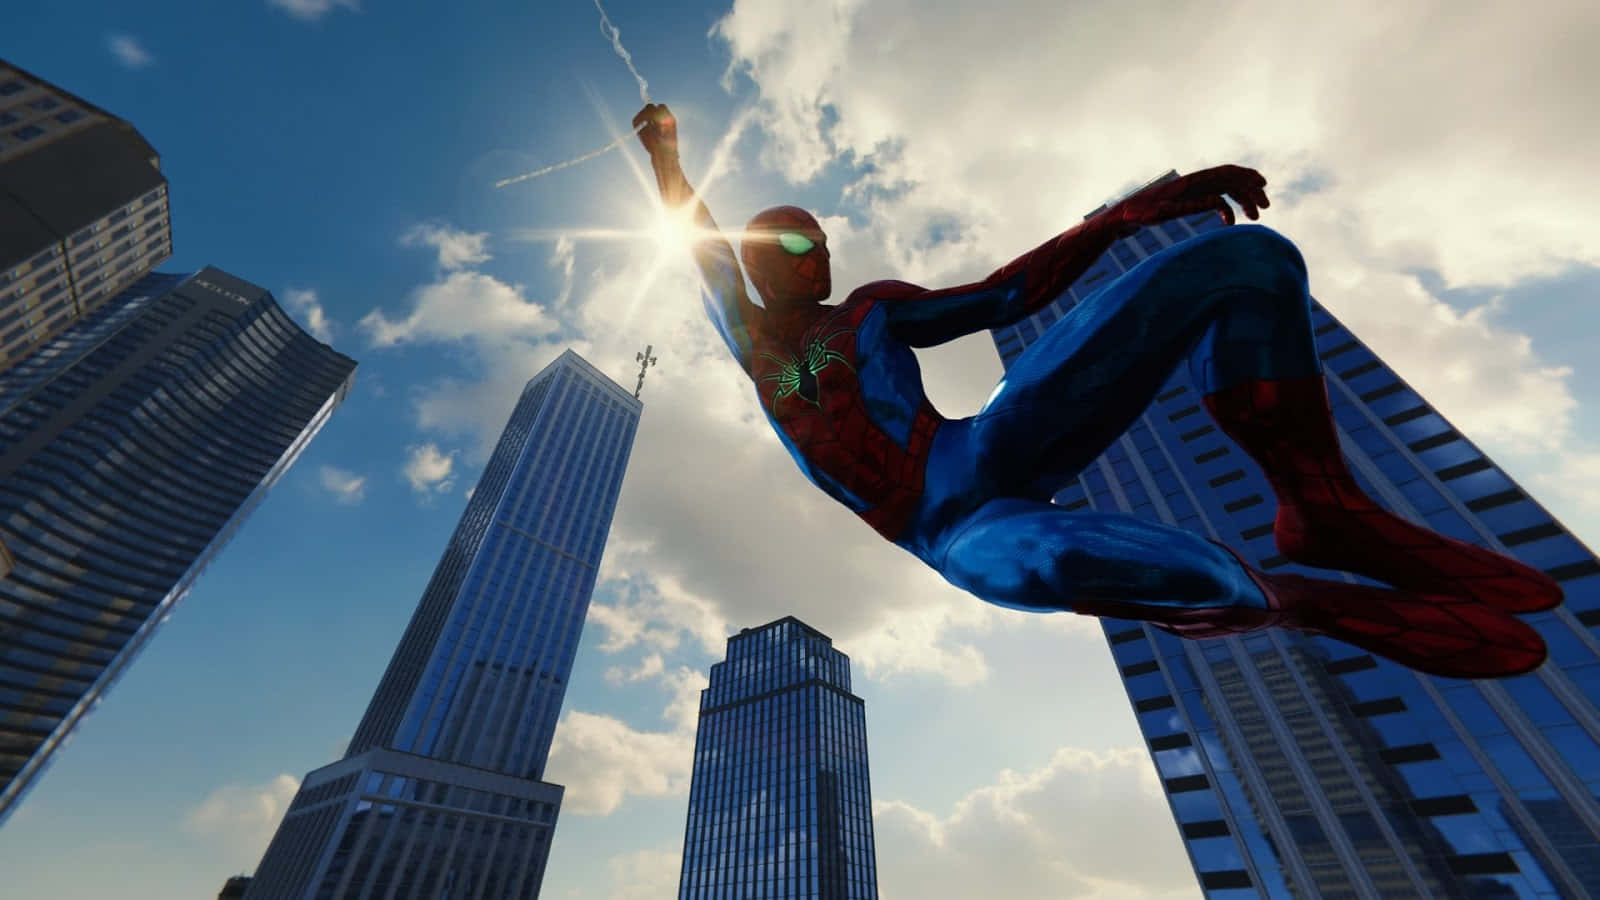 Web-Slinging Superhero in Action Wallpaper